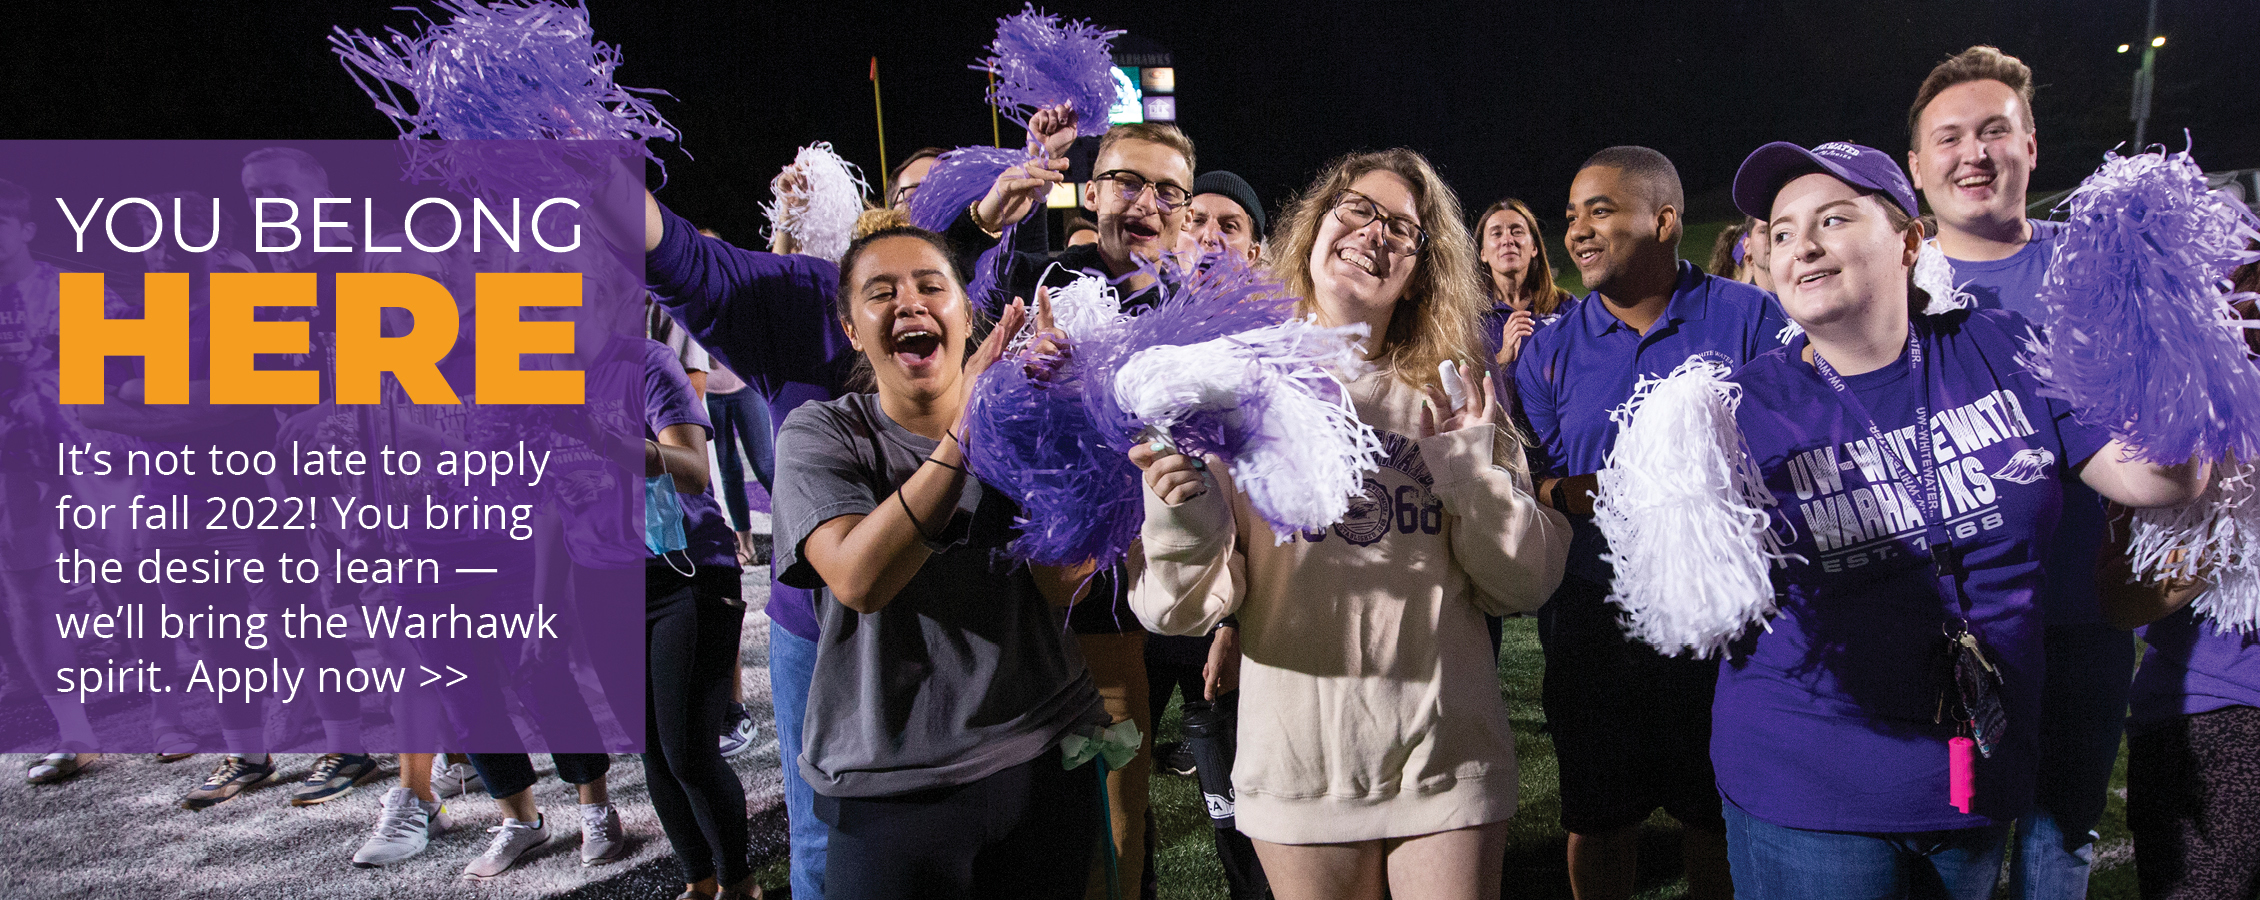 Students cheer at RU Purple.